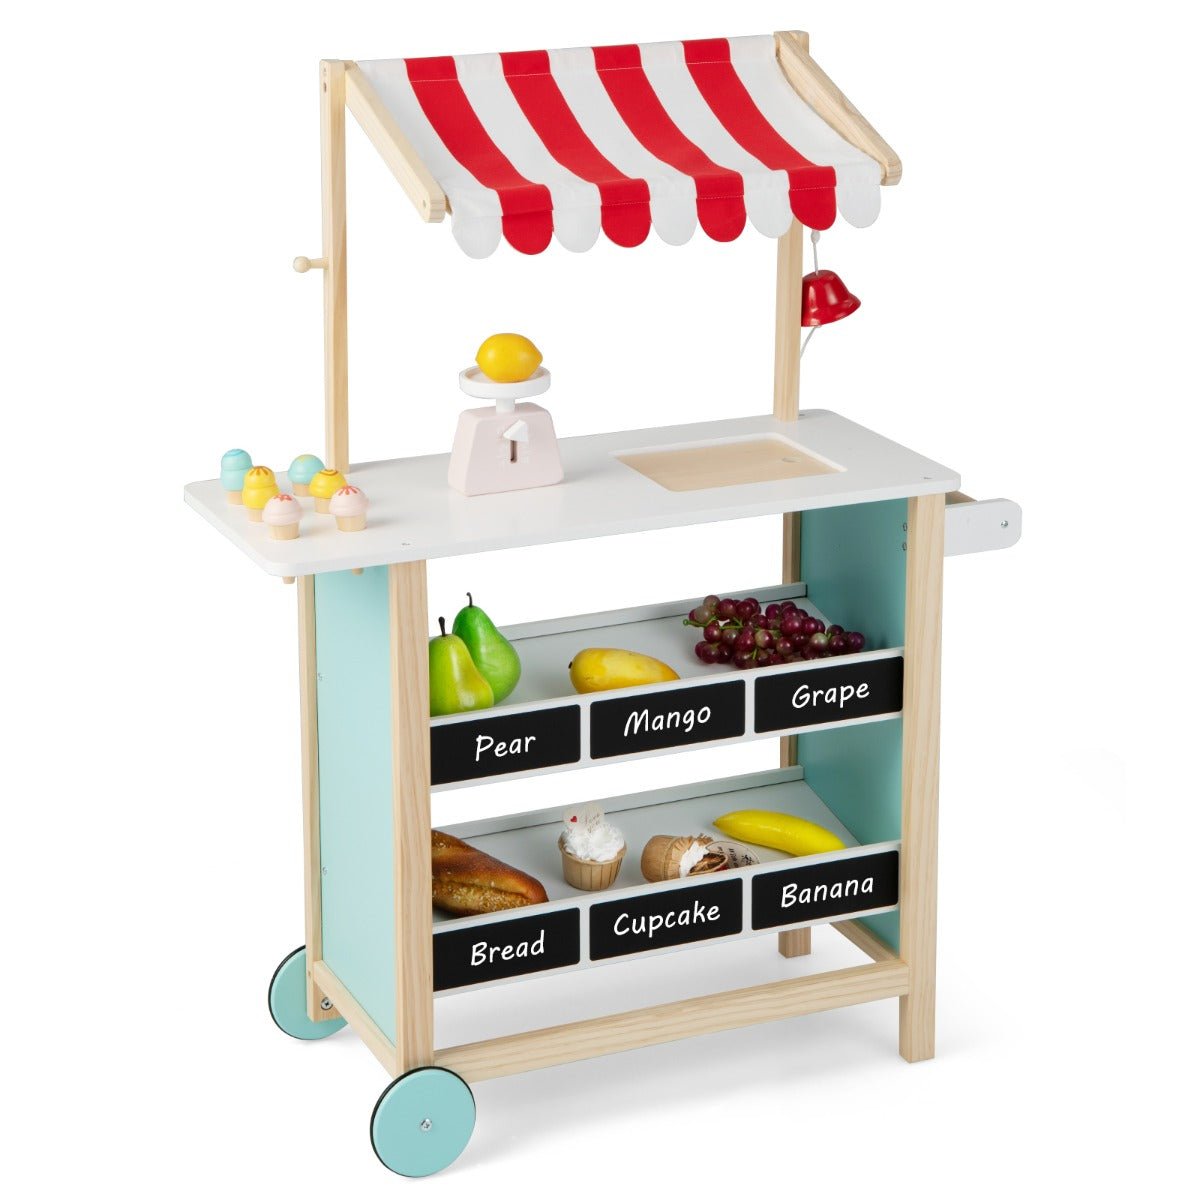 Imagination on Wheels: Kids Wooden Ice Cream Cart with Chalkboard & Storage